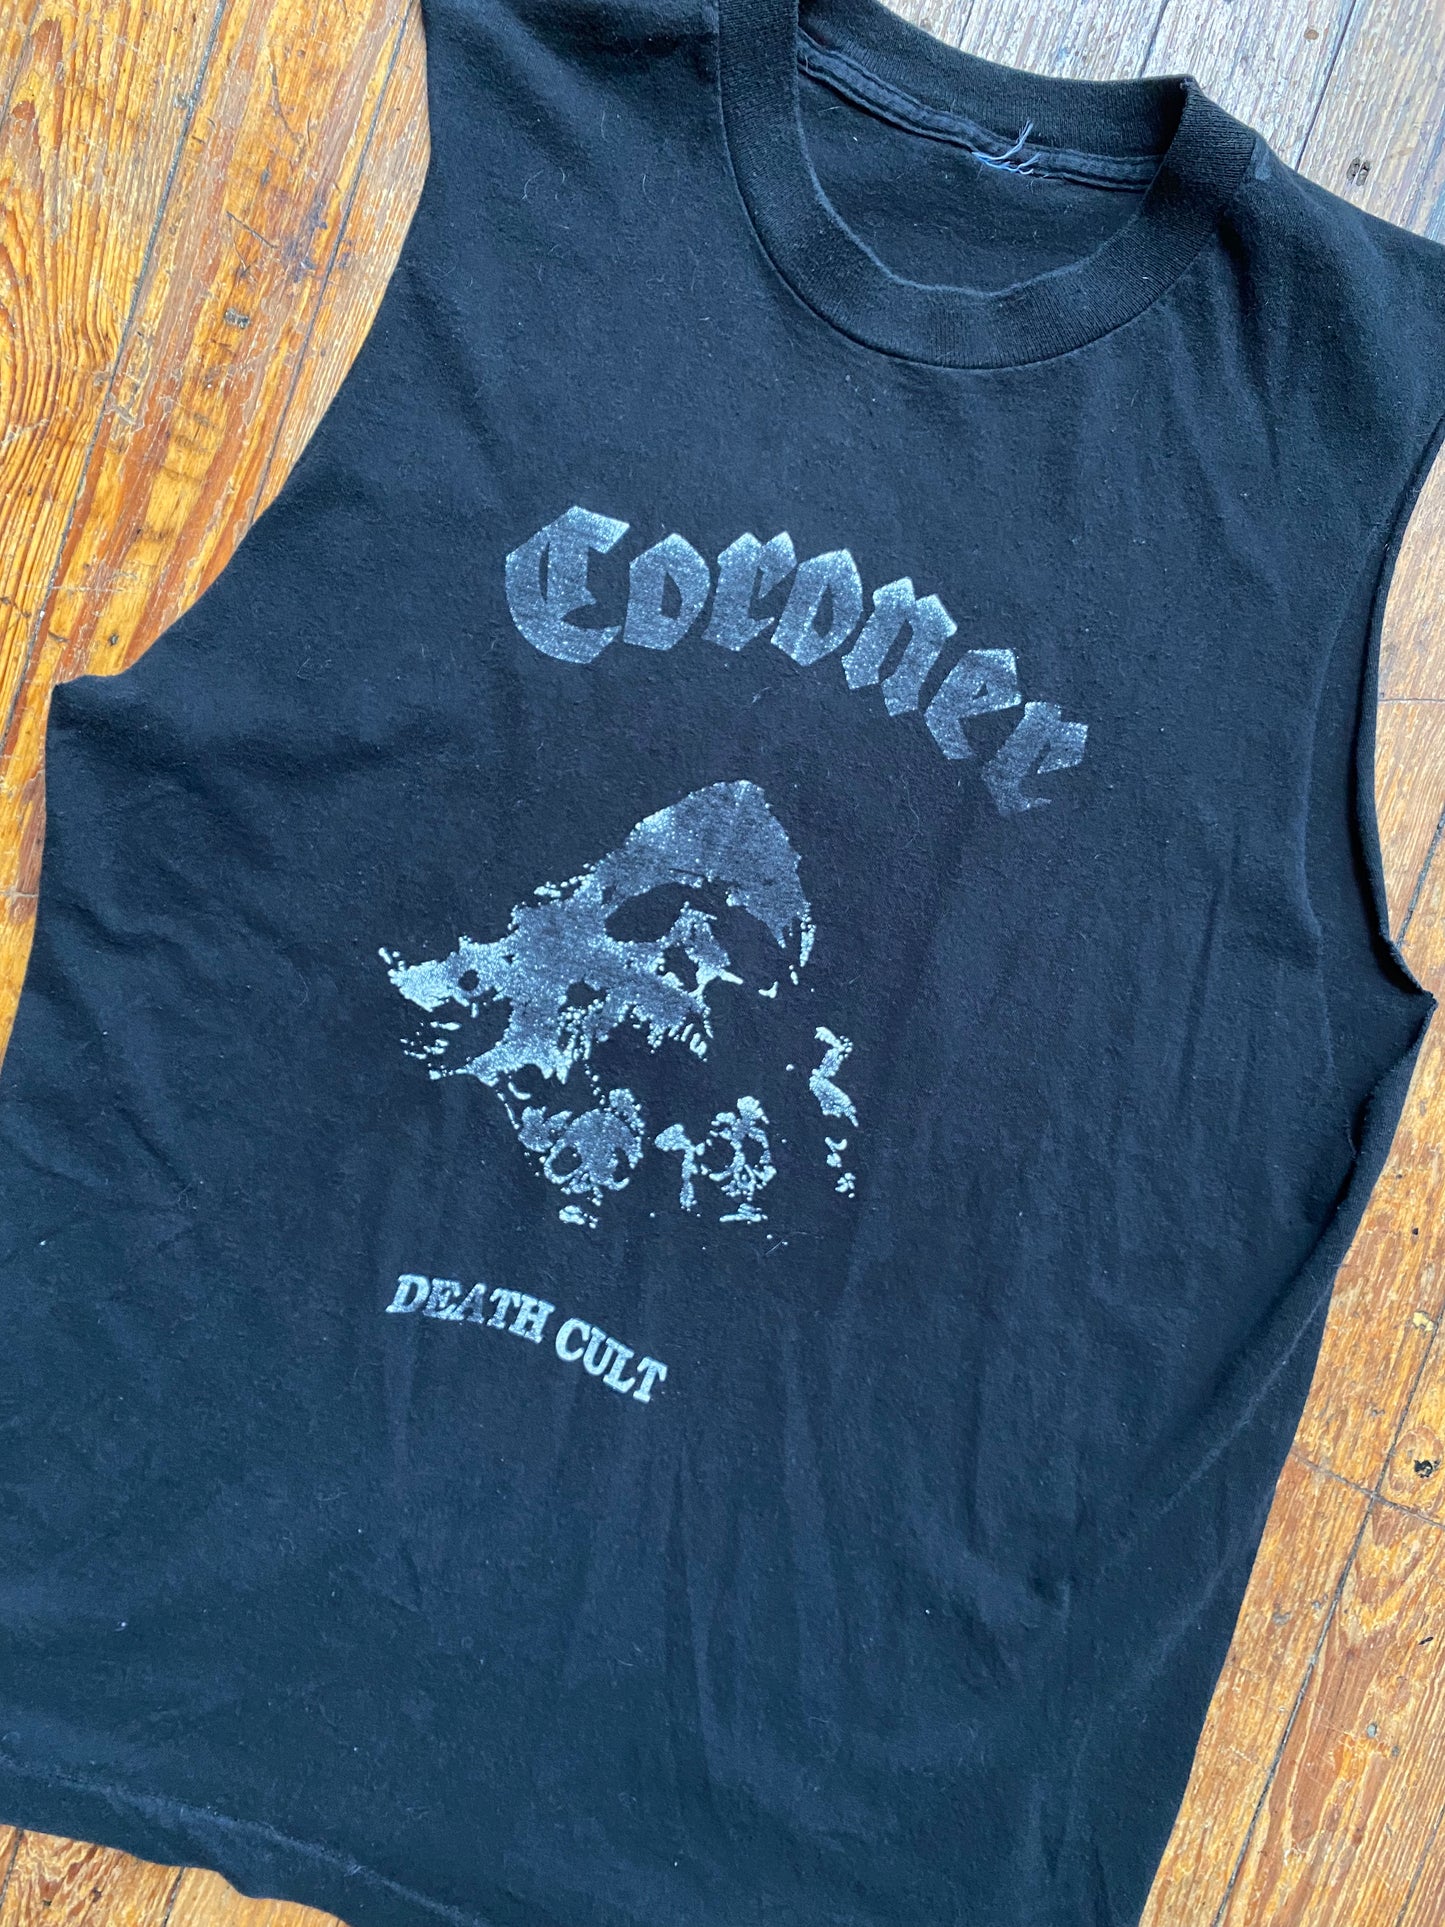 Coroner “Death Cult” Cut Off Shirt